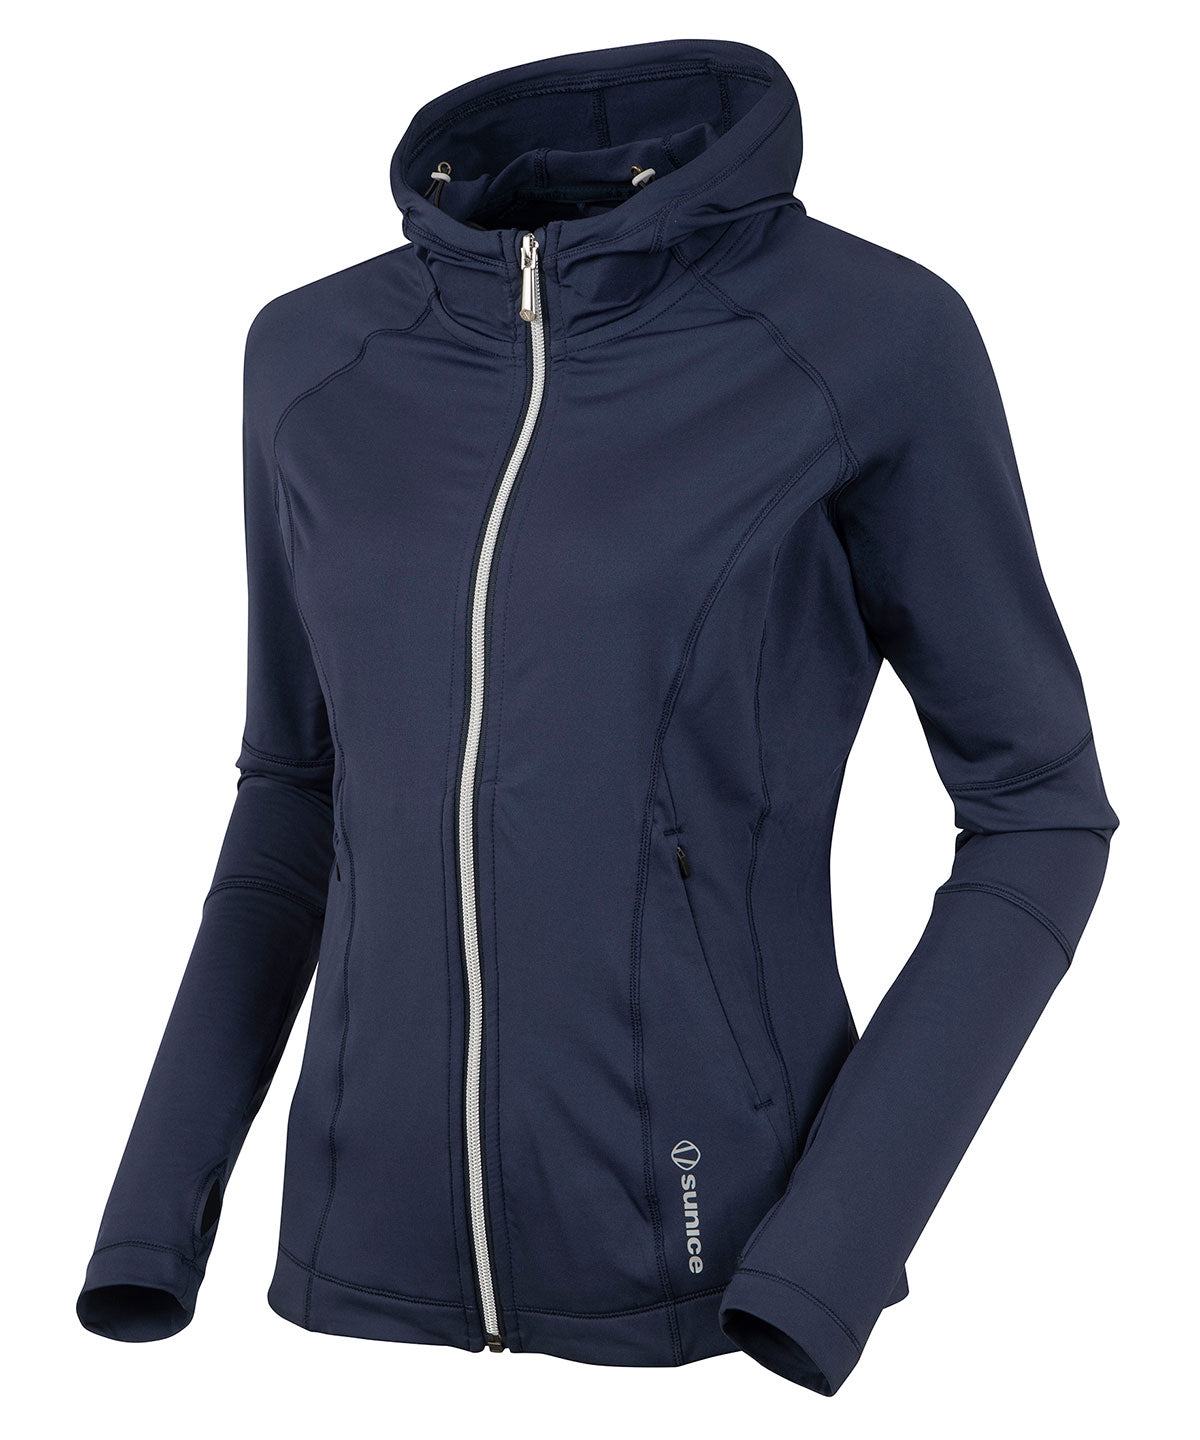 Daily Sports Mia Short Sleeve Wind Women's Golf Jacket - Navy